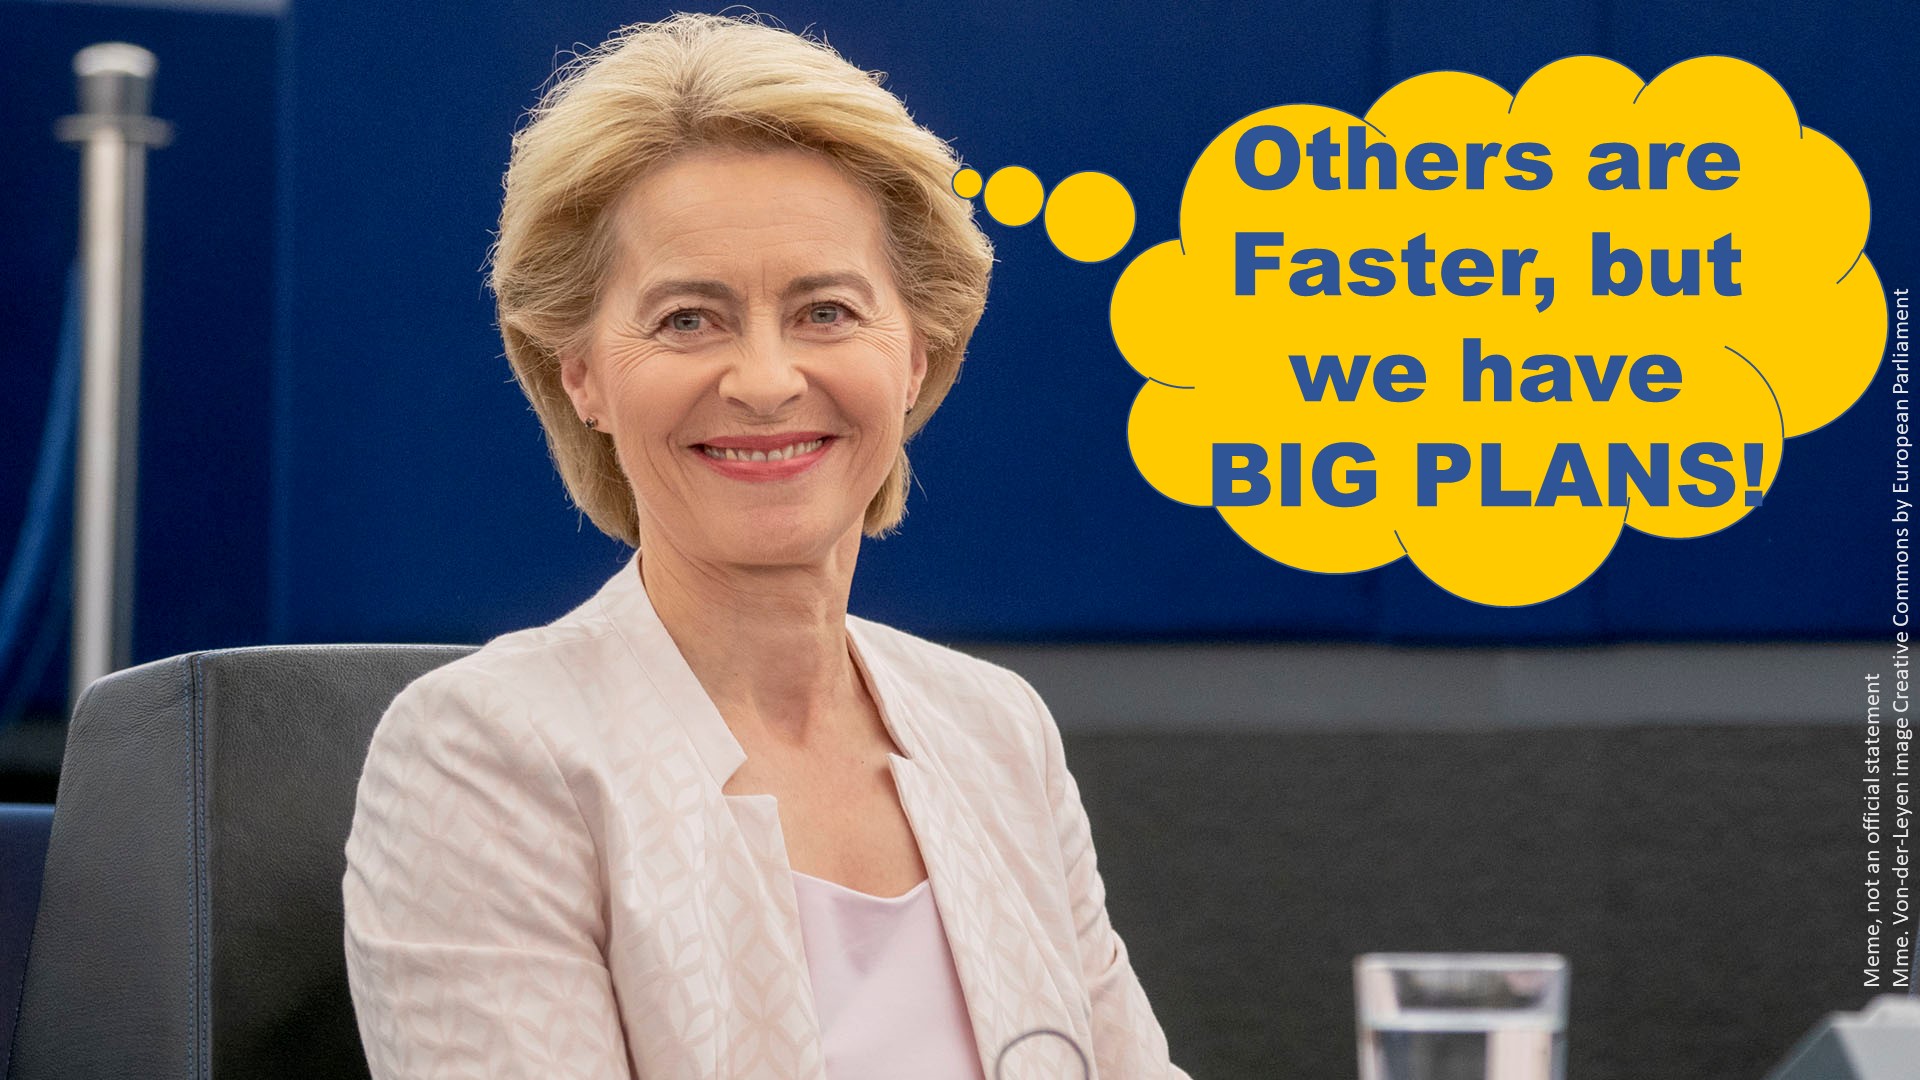 Von-der-Leyen Meme: Others are Faster. But we have BIG PLANS!